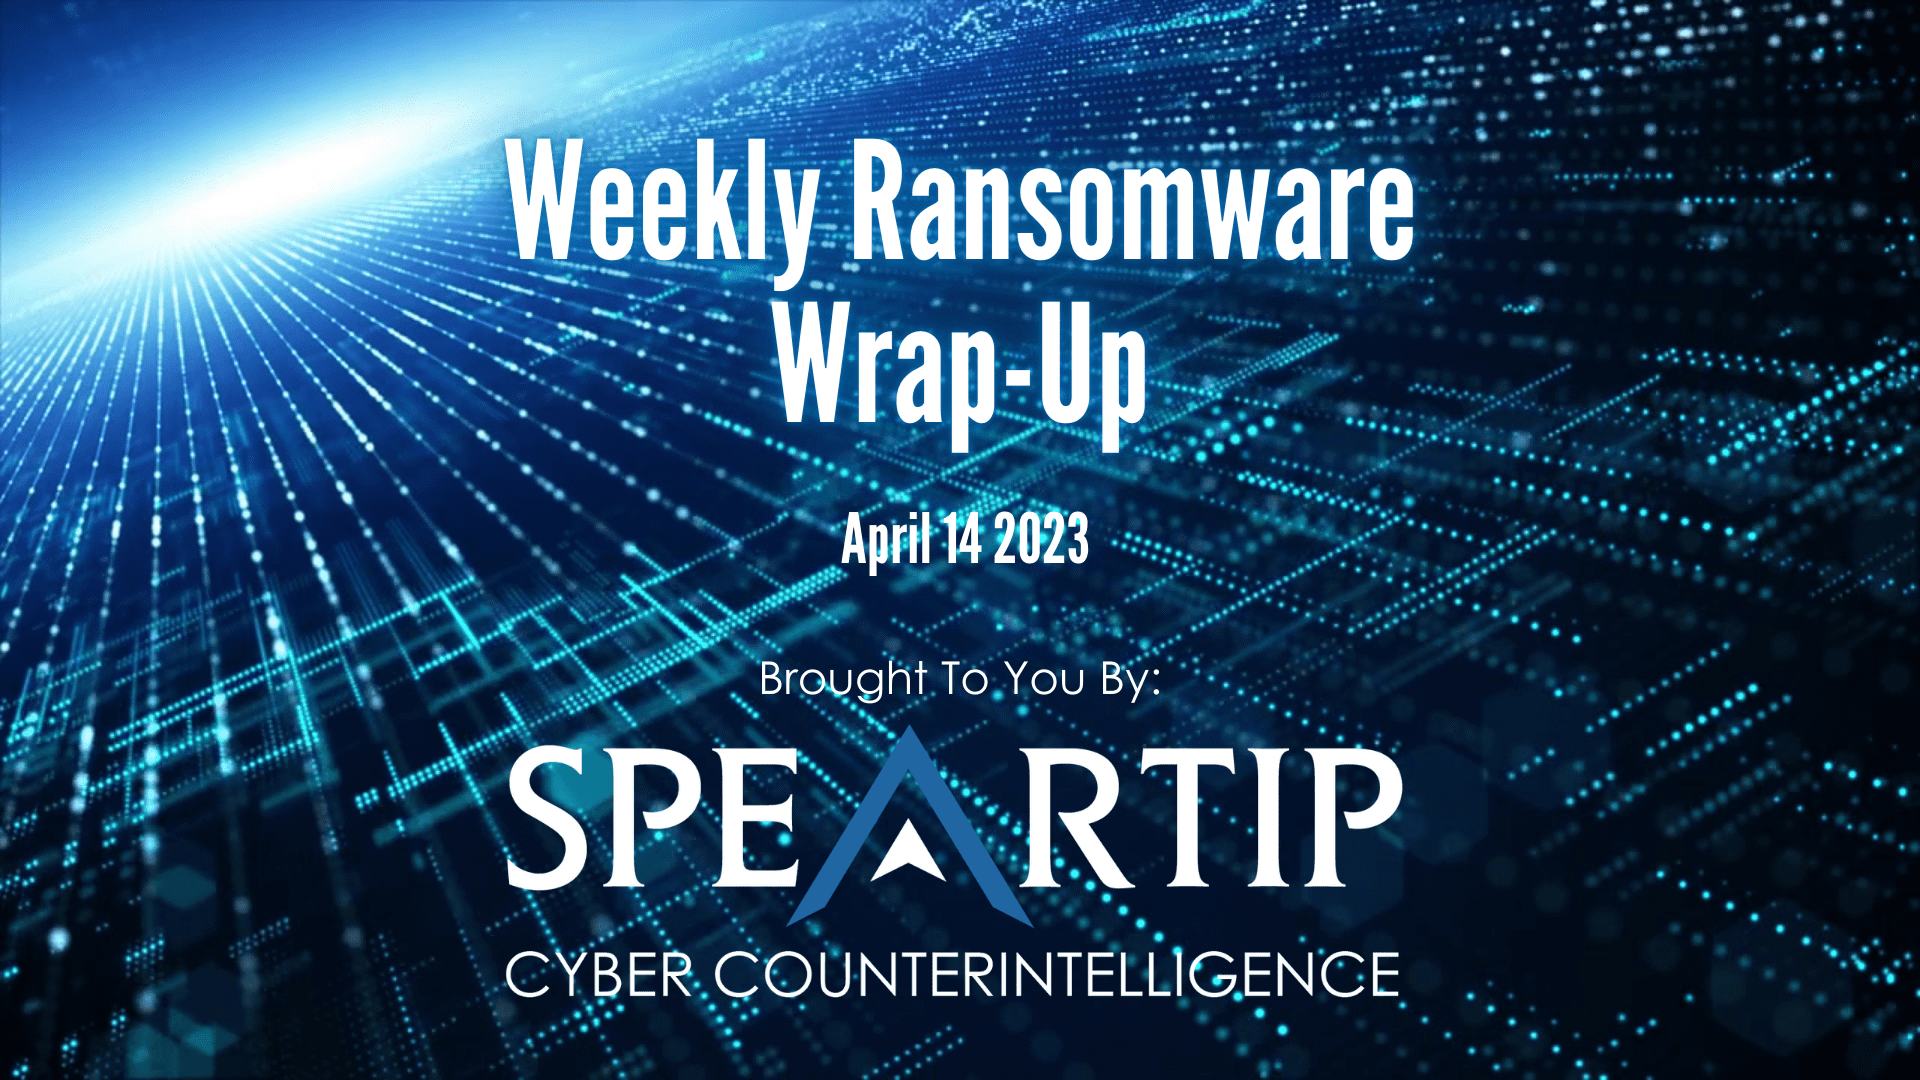 April 14, 2023 Ransomware Wrap-Up